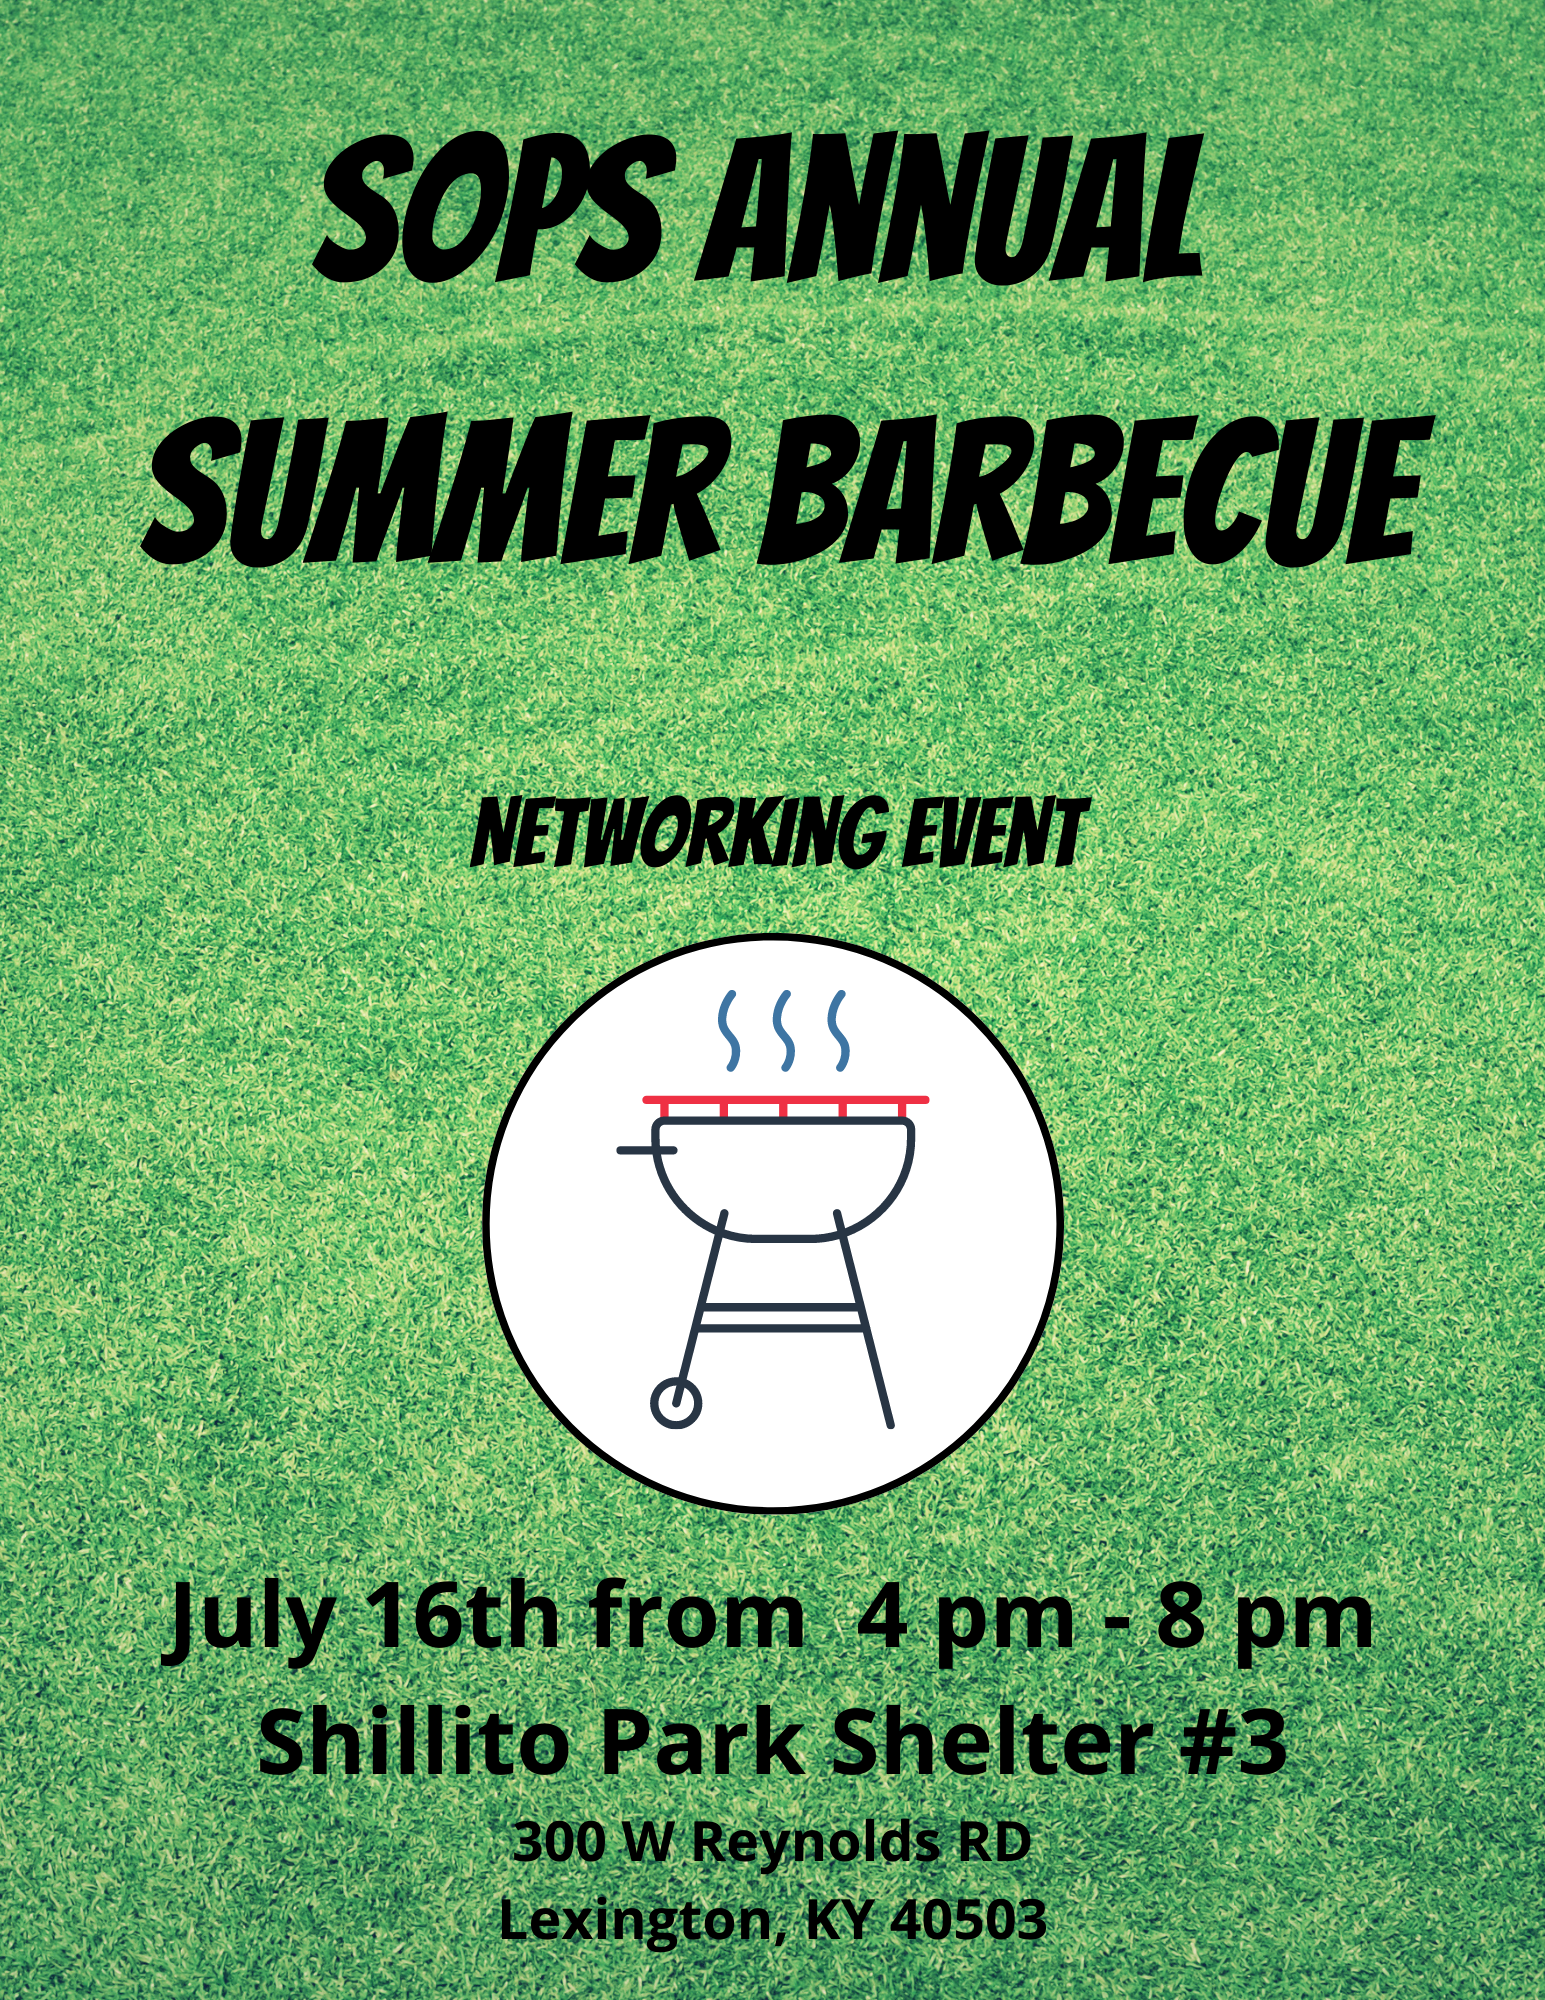 Summer networking event flyer